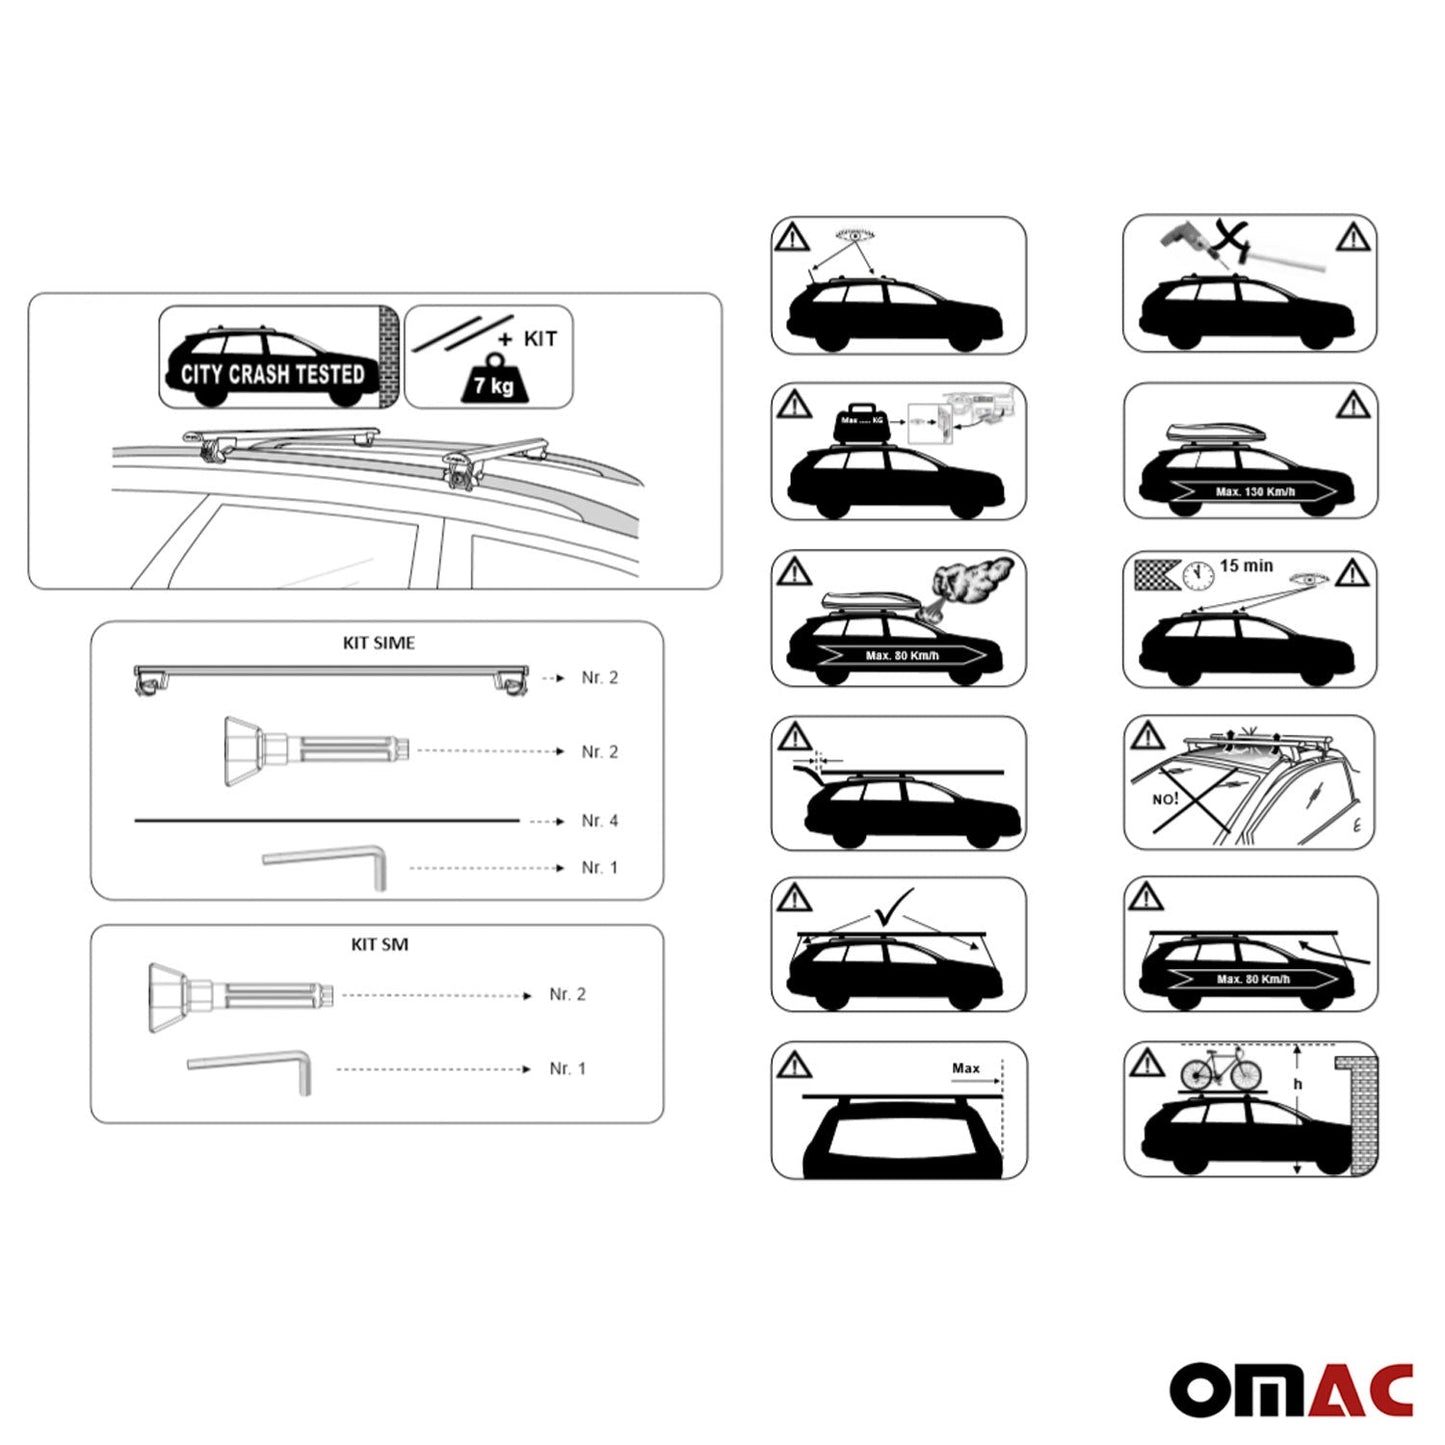 OMAC Roof Rack Cross Bars Lockable for Renault Clio 3 Estate 2005-2012 Alu Silver 2x U004368